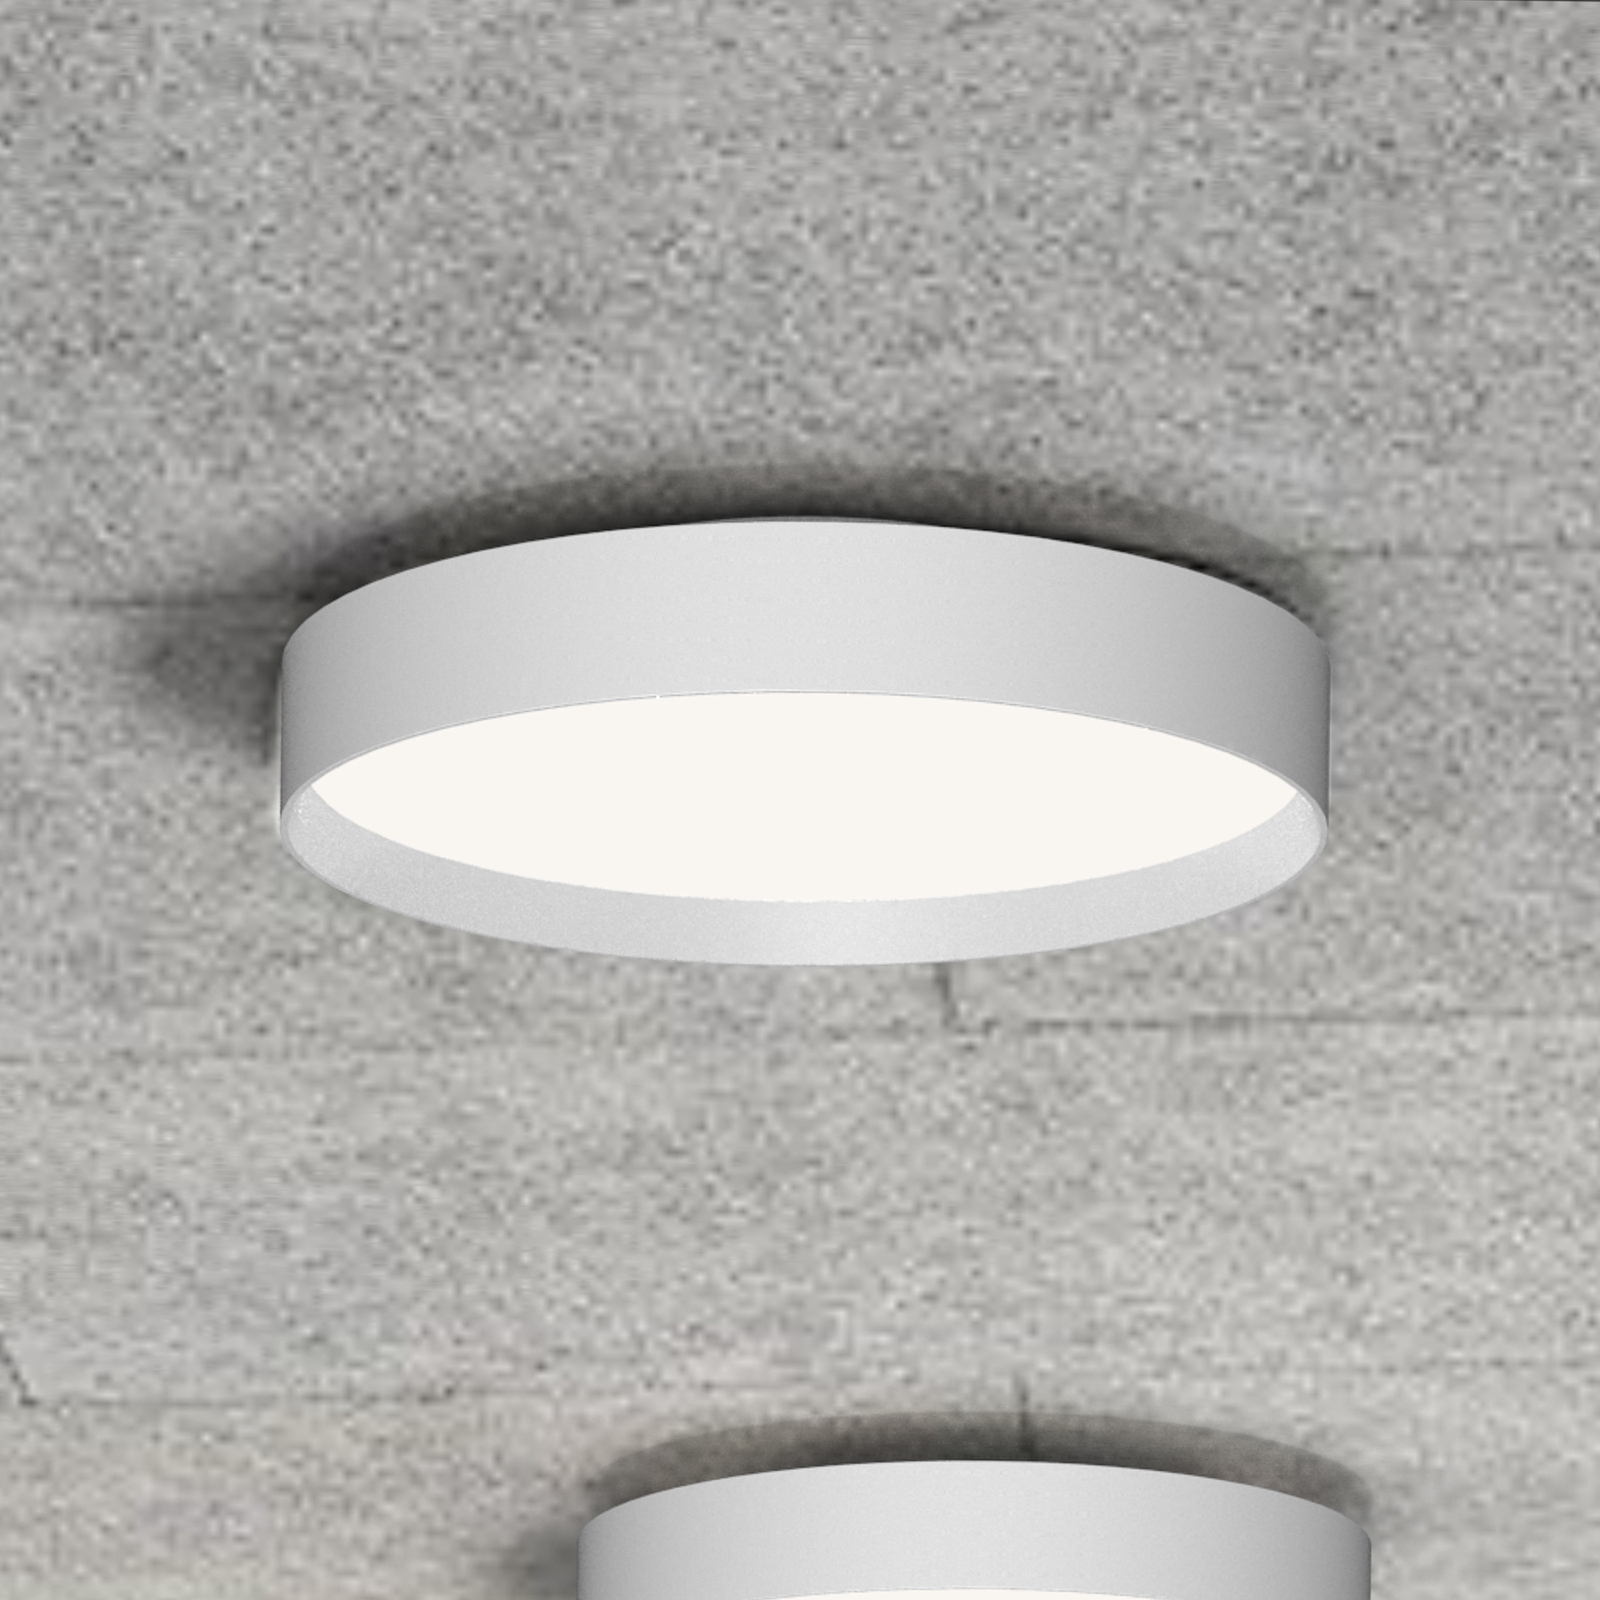 LOOM DESIGN Lucia LED plafondlamp Ø45cm wit